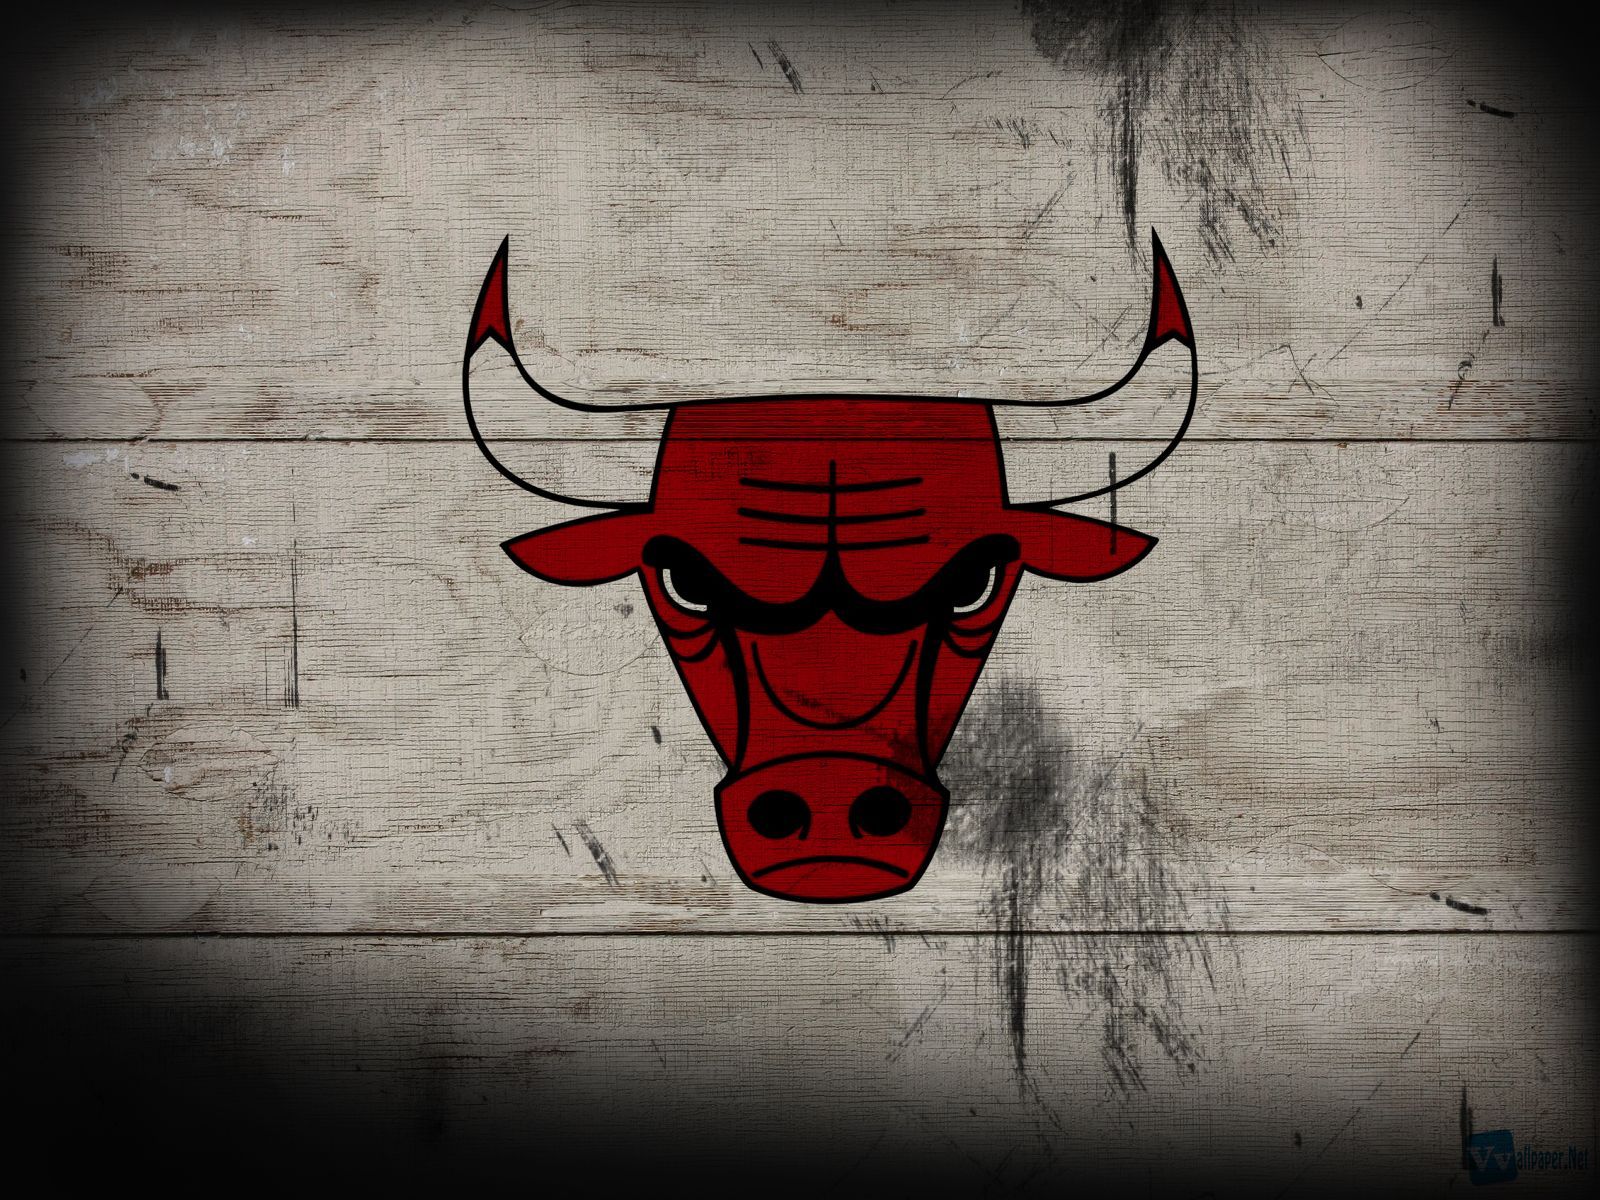 Fondos De Pantalla De Los Chicago Bulls Fondosmil